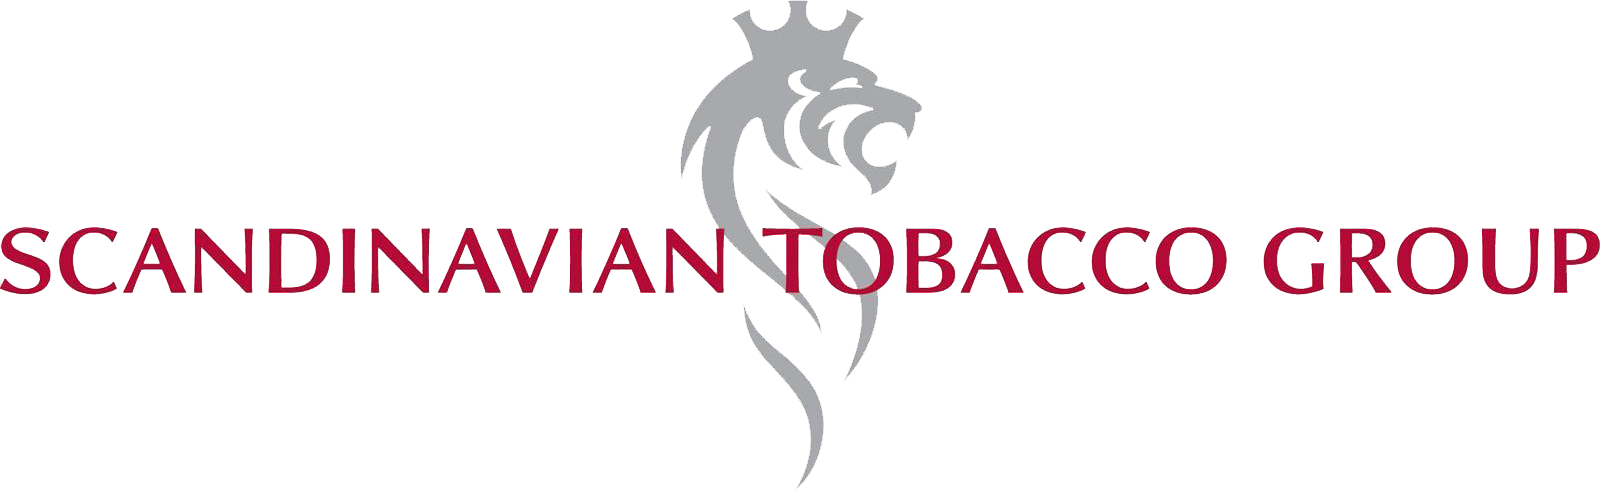 scandinavian-tobacco_owler_20180131_223325_original